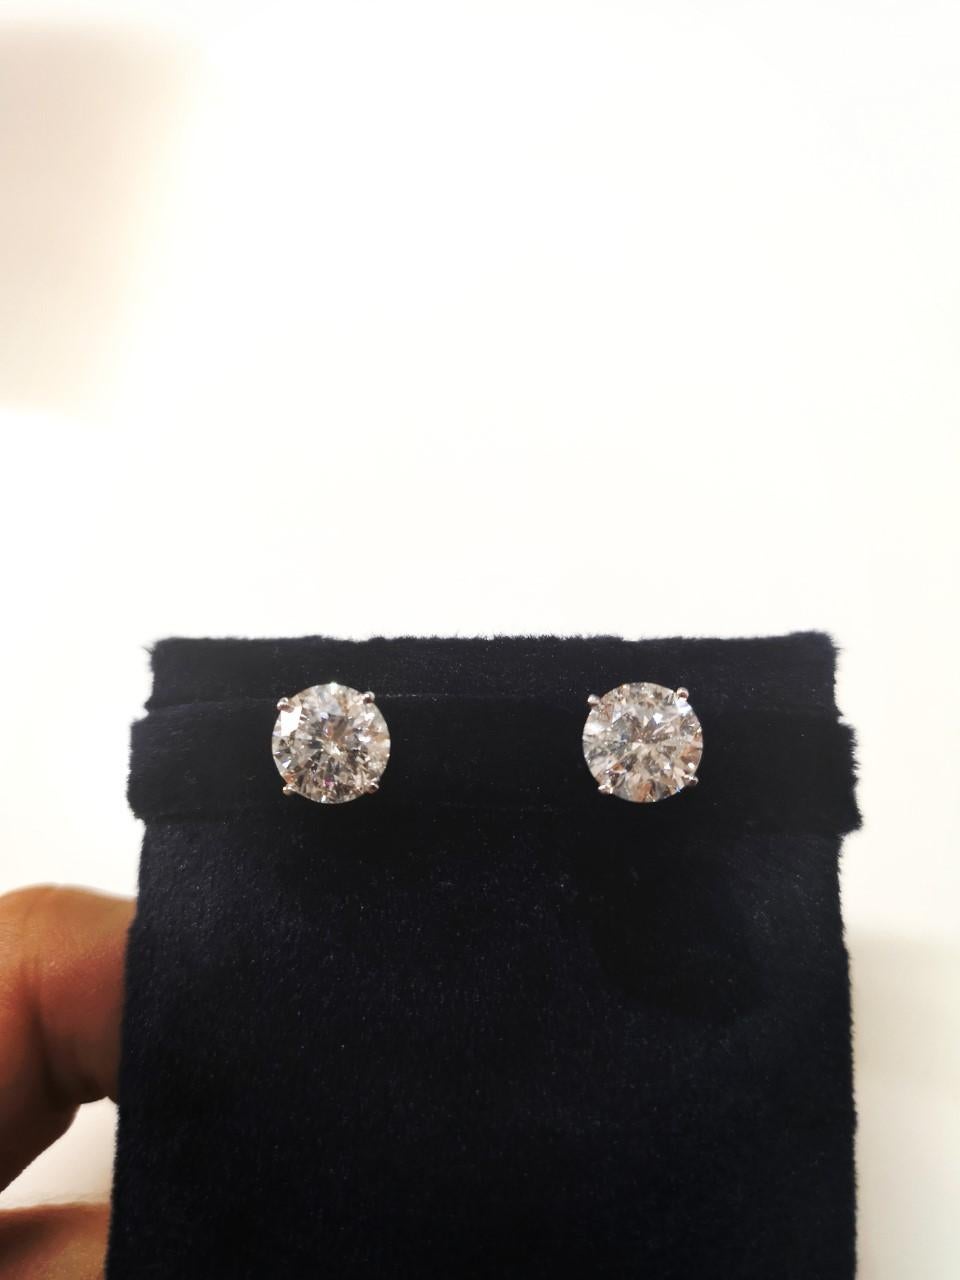 diamond earrings 4 carat